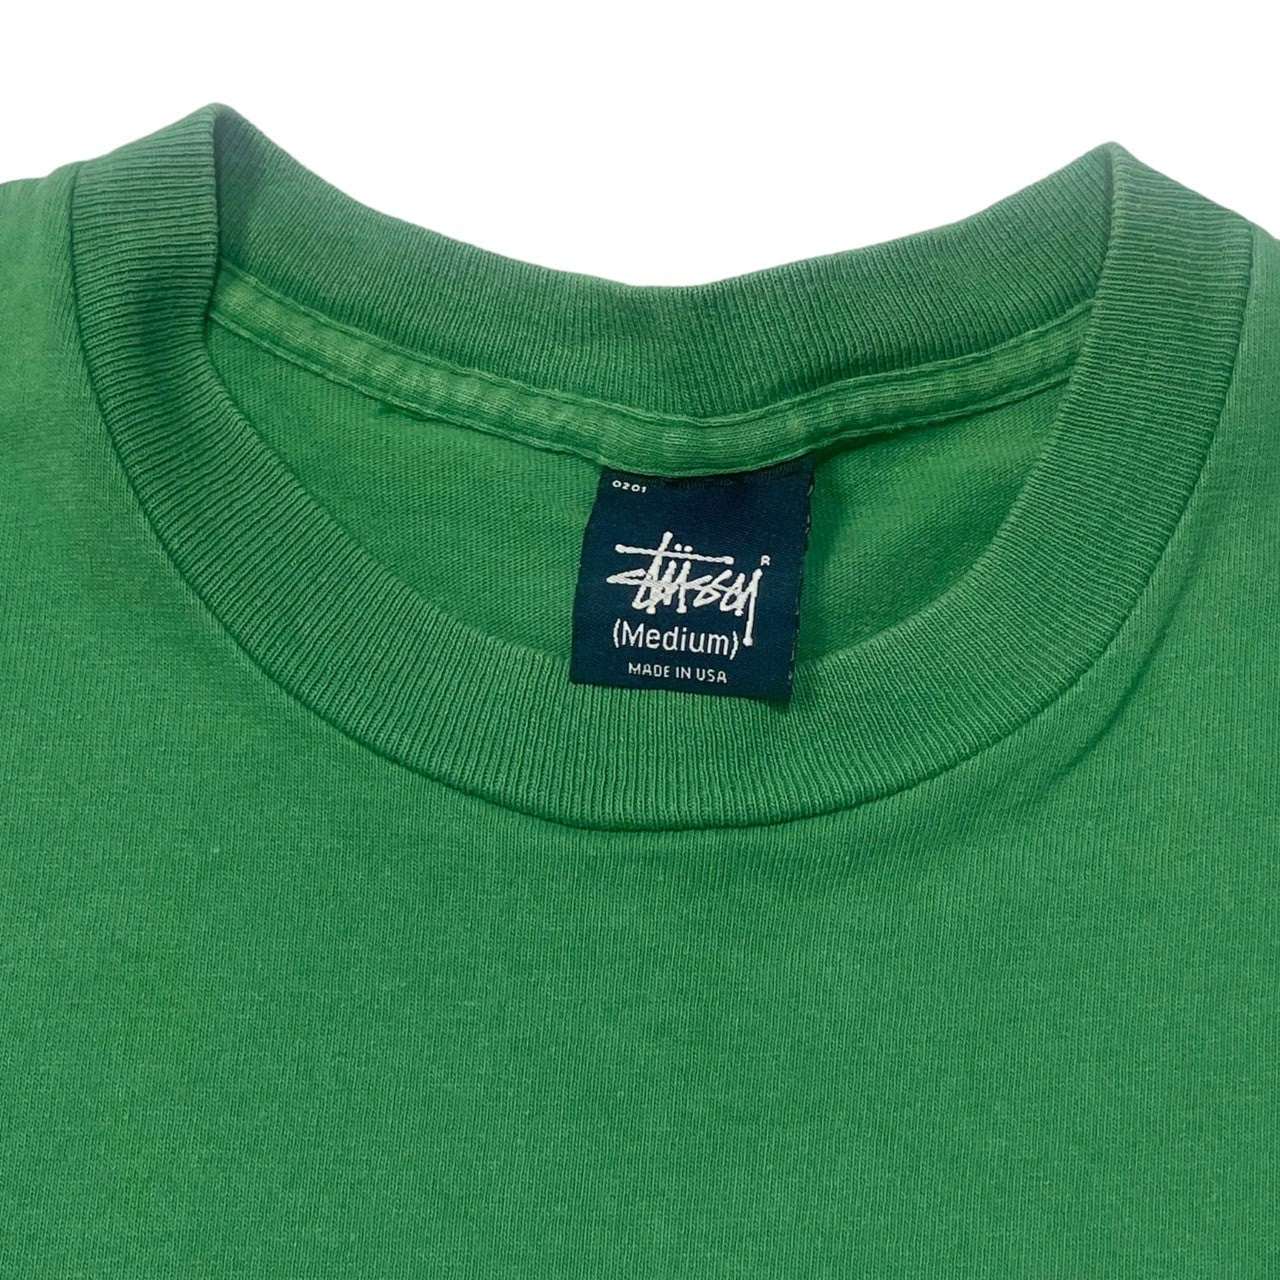 STUSSY(ステューシー) 90's~00's VINTAGE Tシャツ with lots of logos ロゴ 紺タグ SIZE M グリーン  90～00年代 OLD STUSSY